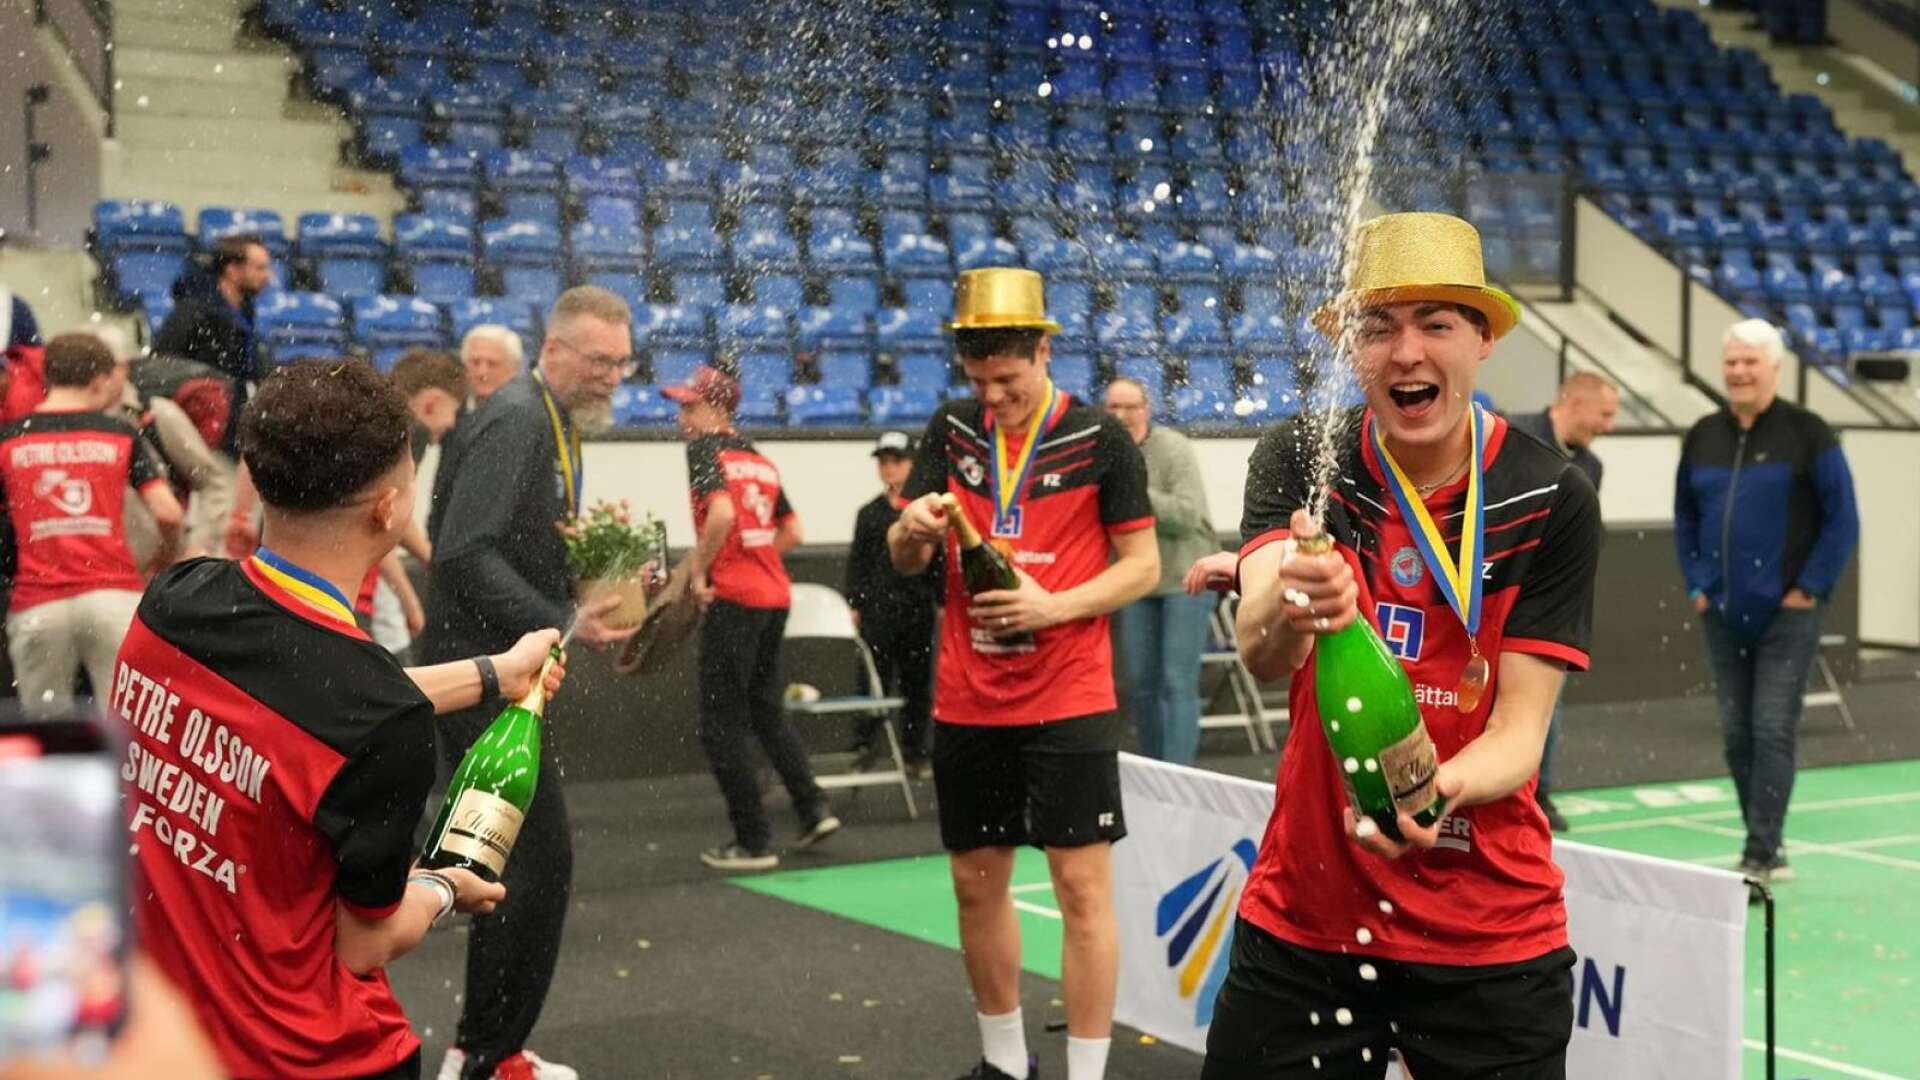 Ludvig Petre Olsson firar med att spruta champagne. I bakgrunden syns pappa Jesper Olsson.